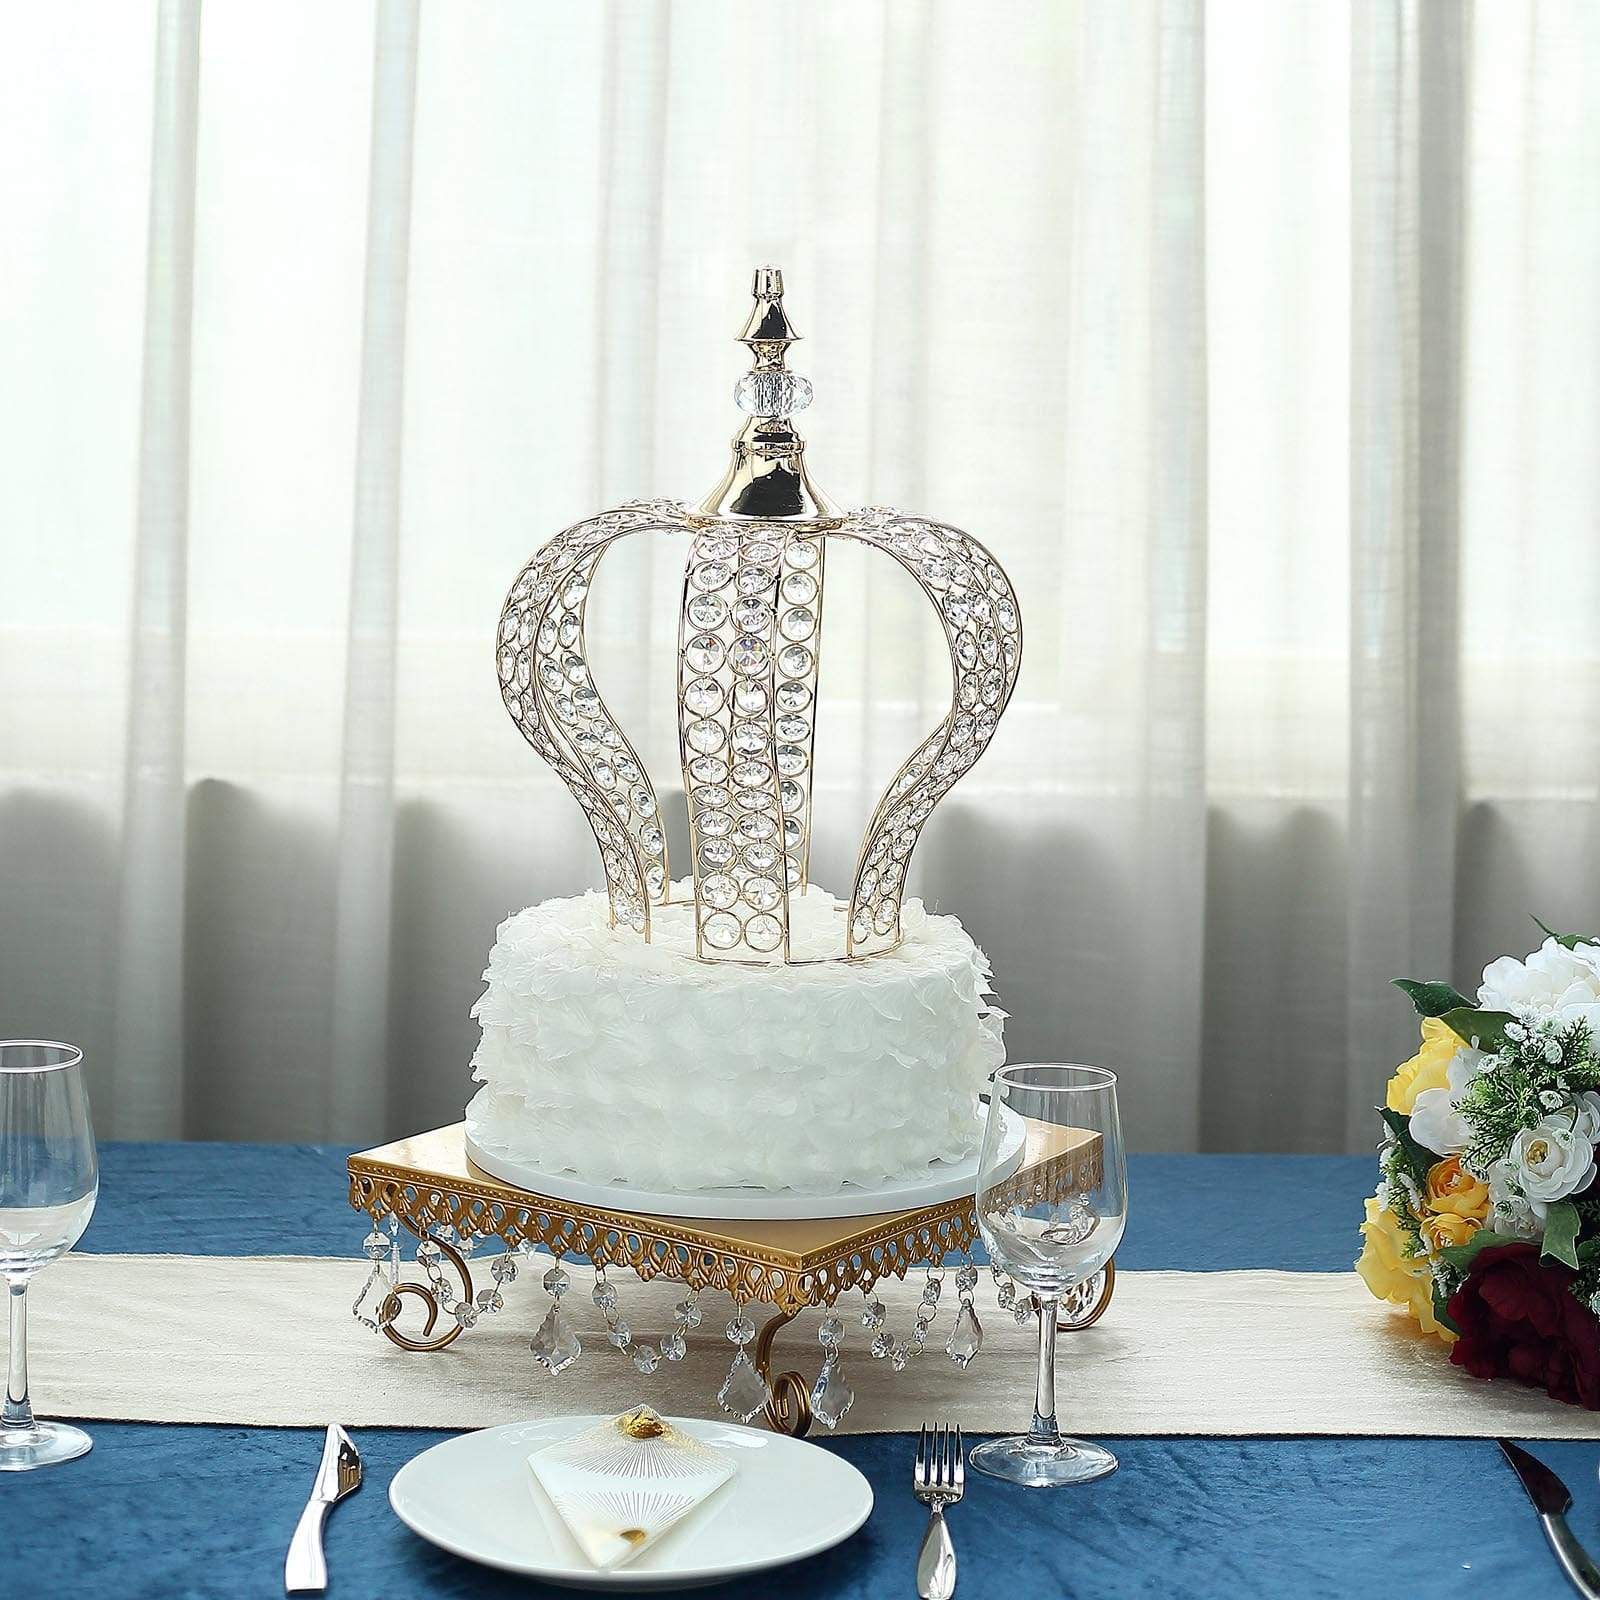 14 in tall Crystal Beaded Metal Crown Cake Topper